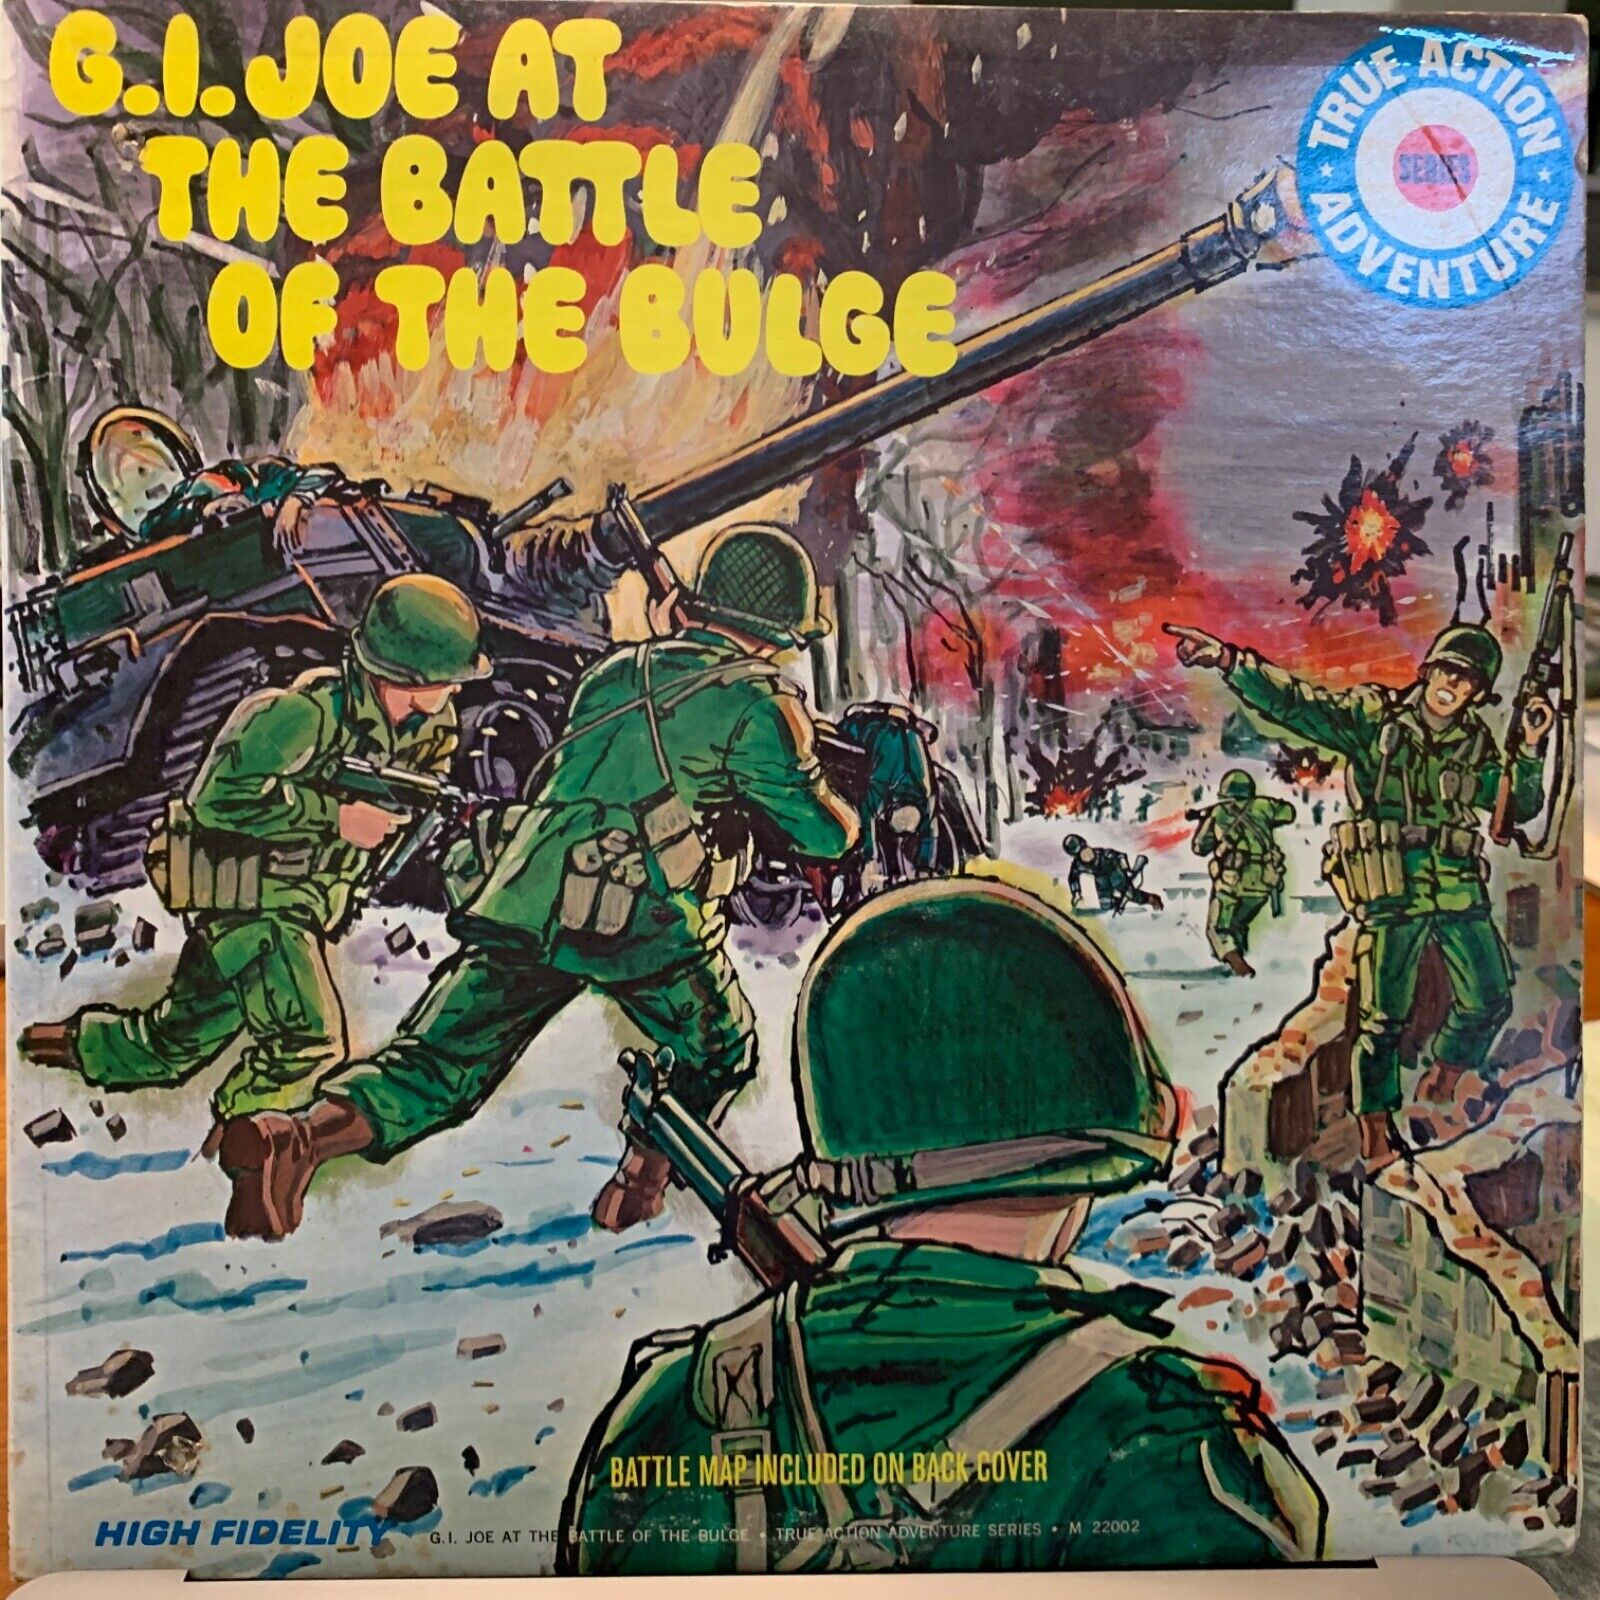 1967 GI Joe True Action Adventure Vinyl LP Record Battle o the Bulge Vintage